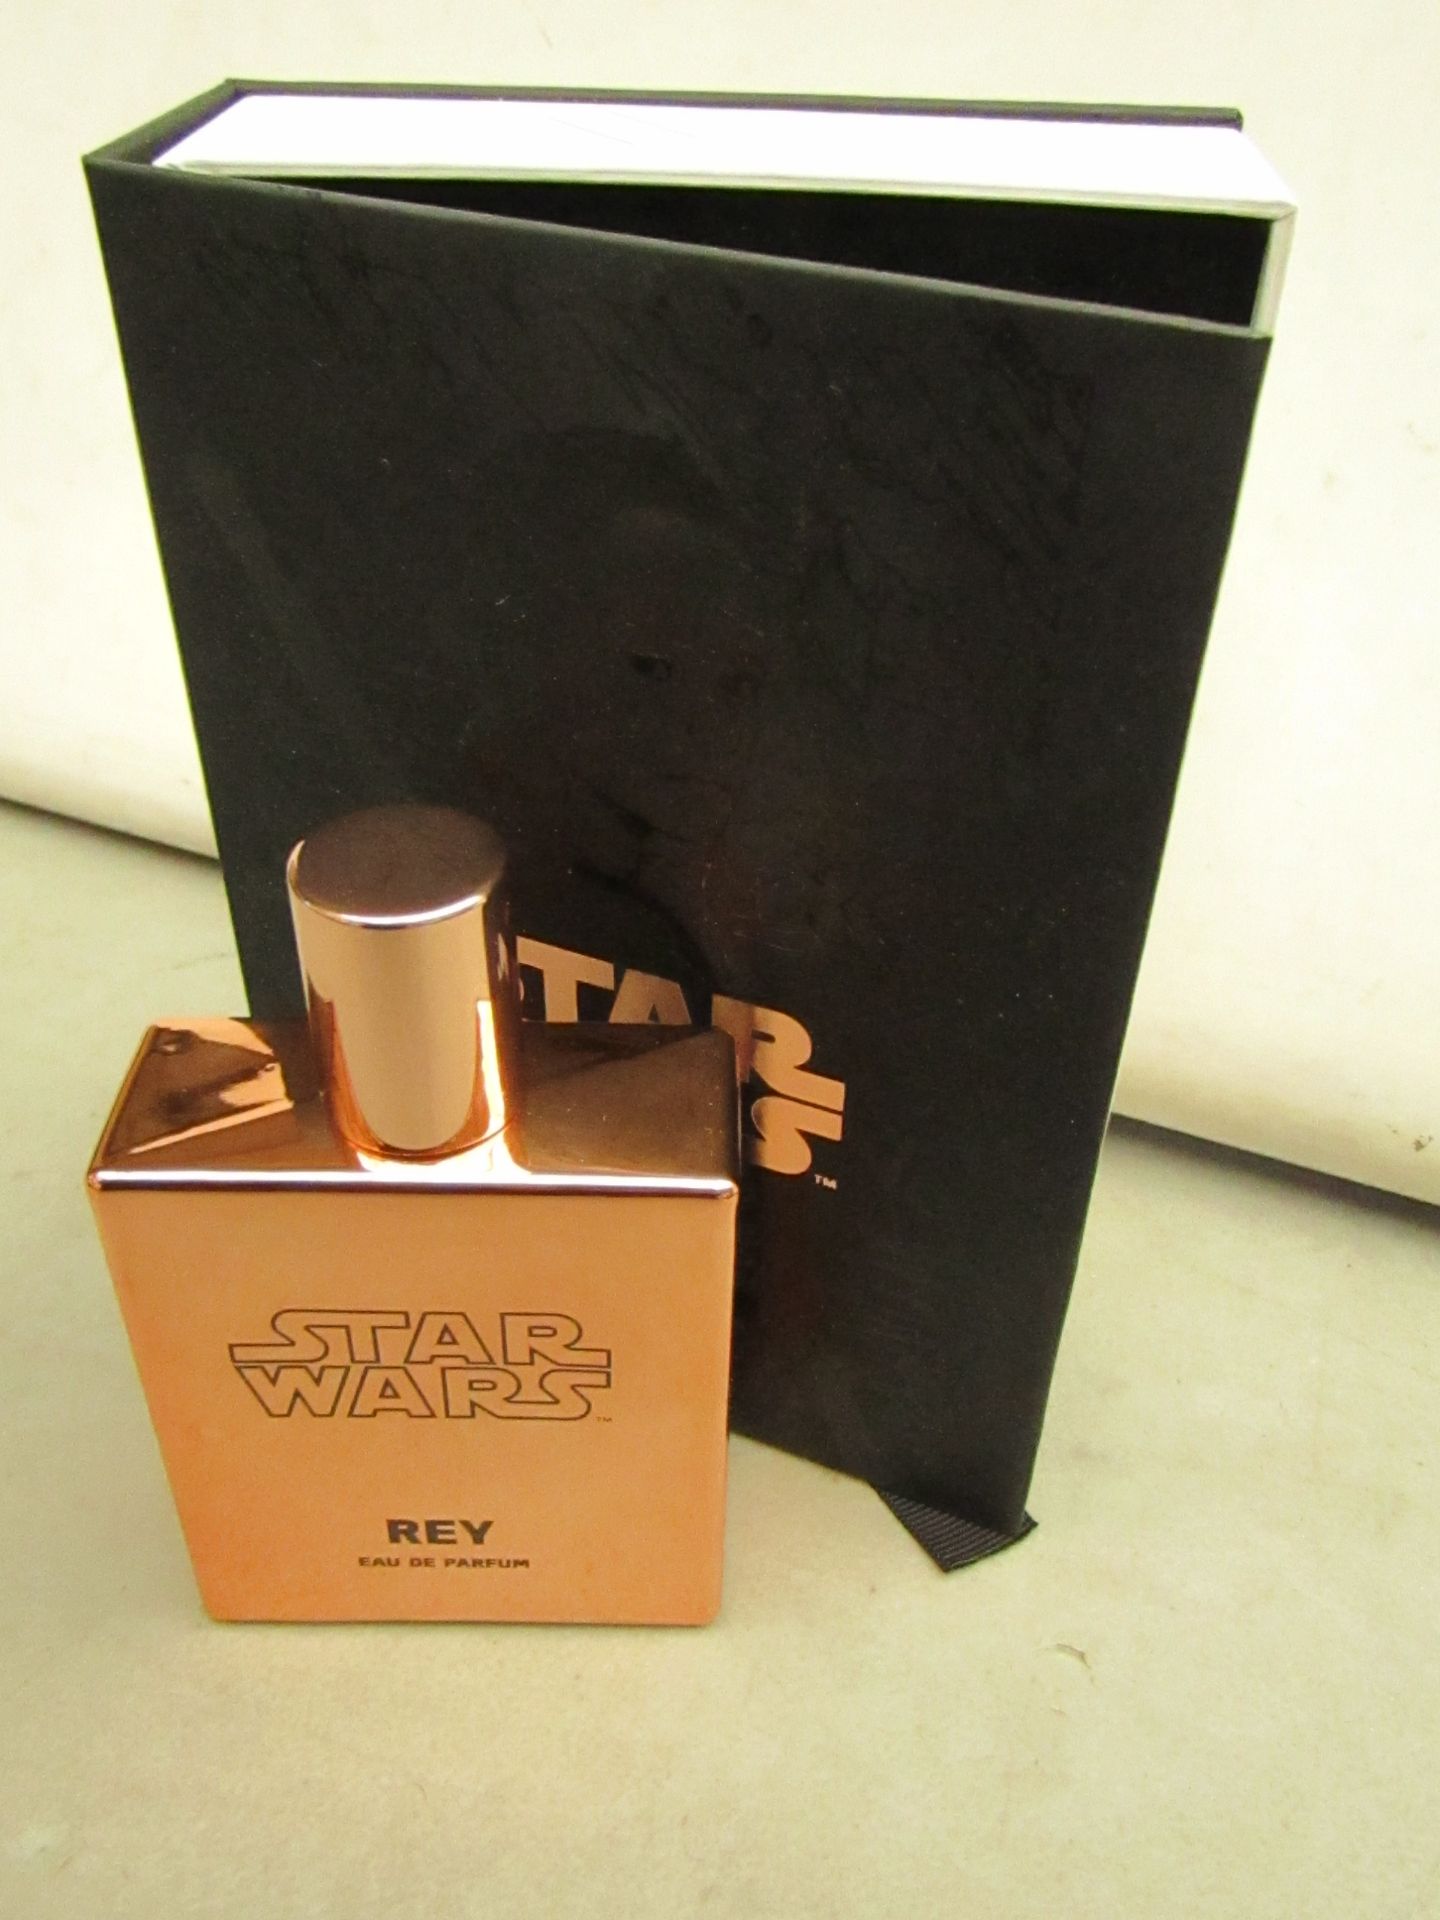 Star Wars Rey Eau De Parfum. 50ml. New & boxed